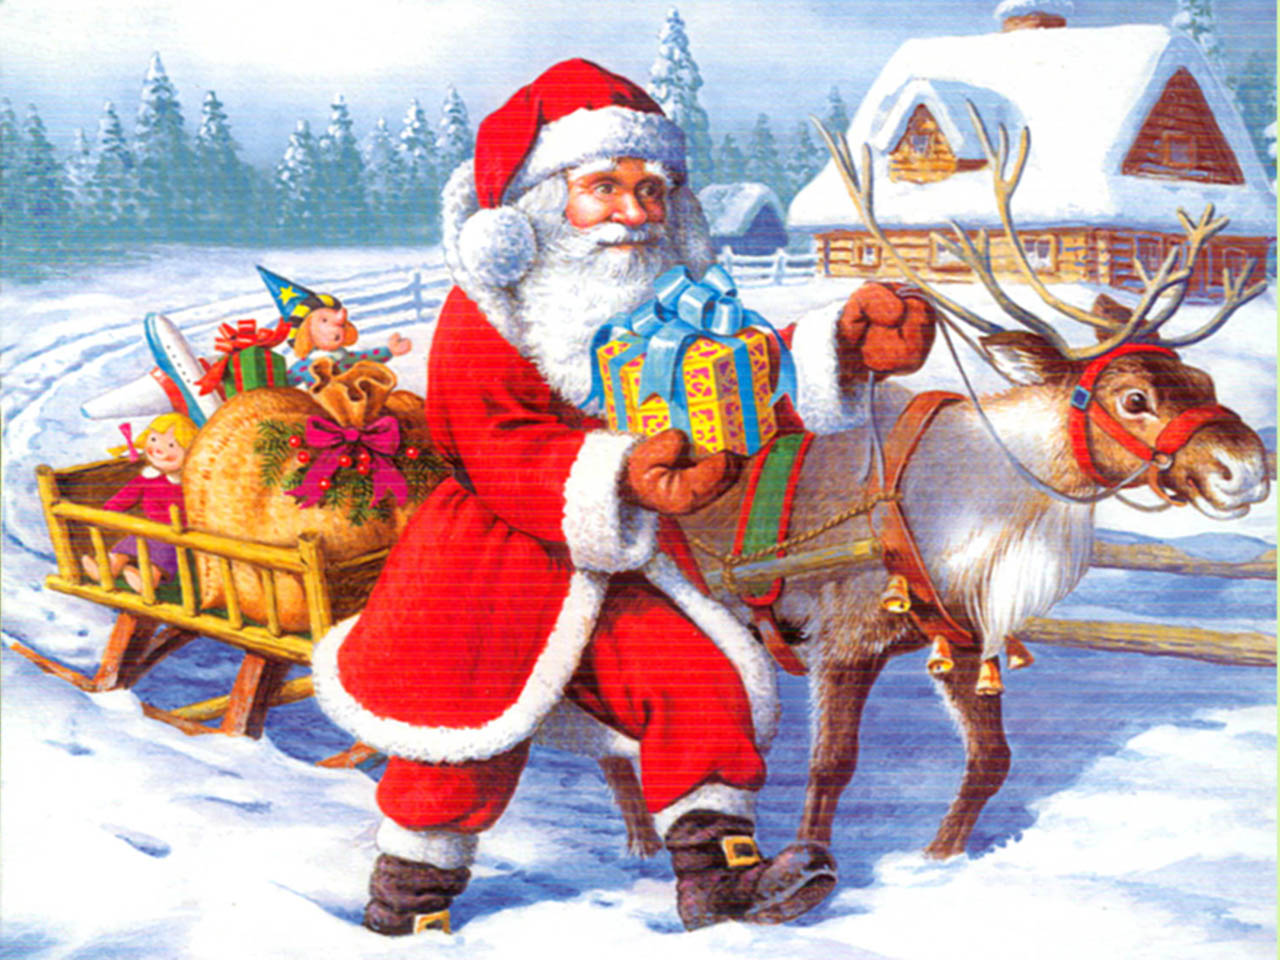 25 Excellent Pictures Of Santa Claus Picsoi HD Wallpapers Download Free Images Wallpaper [wallpaper981.blogspot.com]